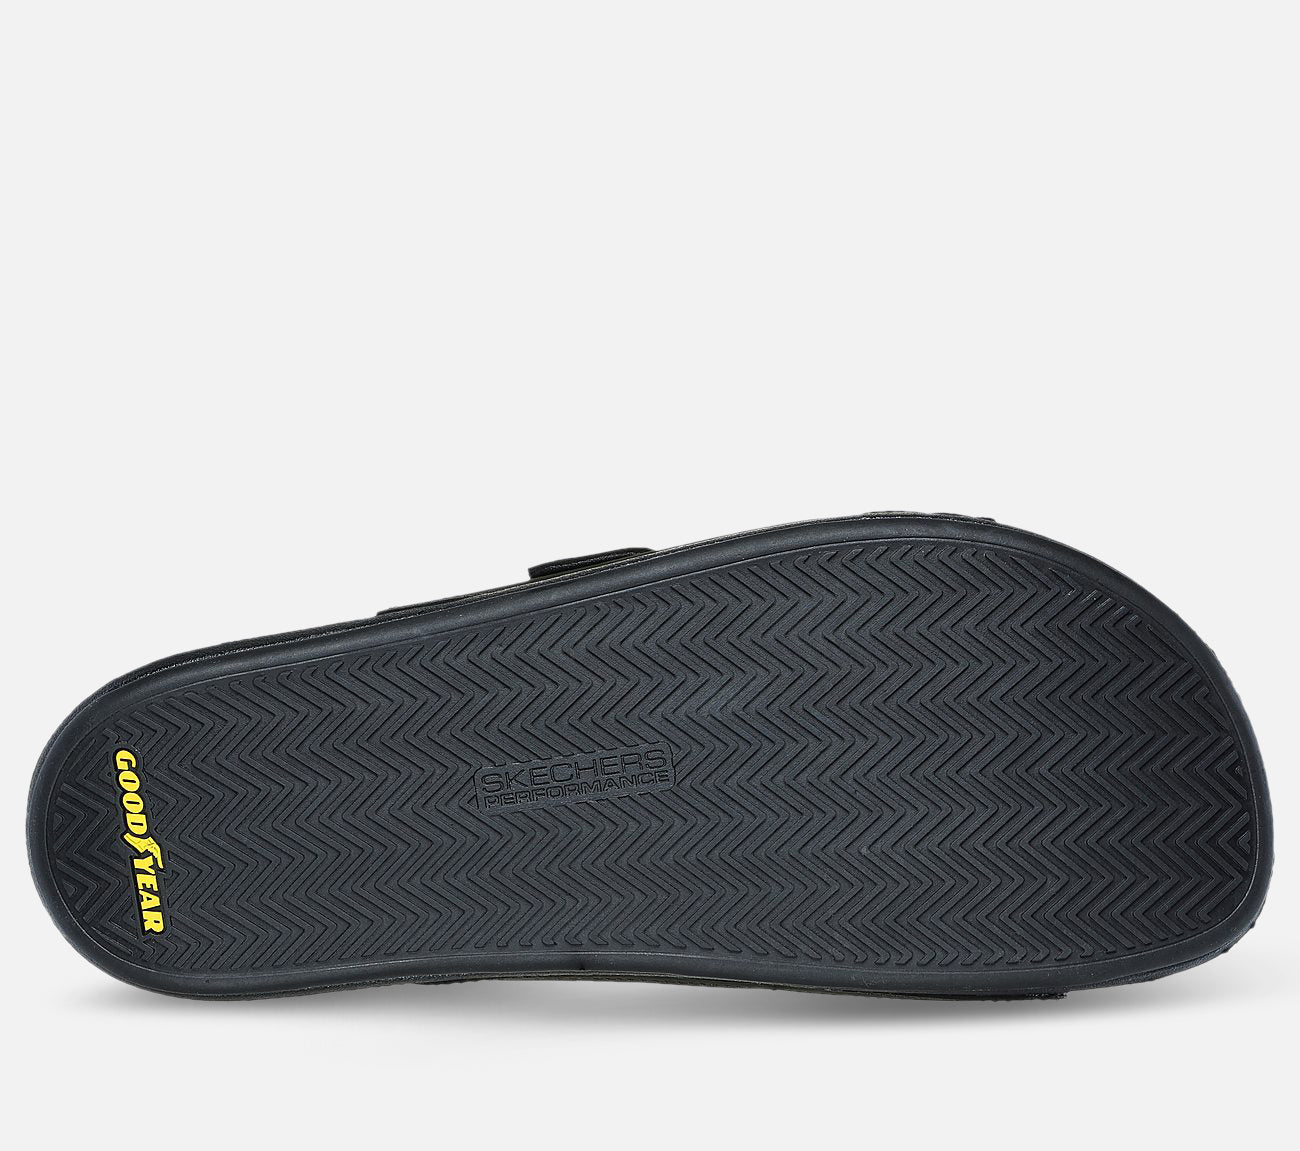 Arch Fit Pro Sandal - Melbourne Sandal Skechers